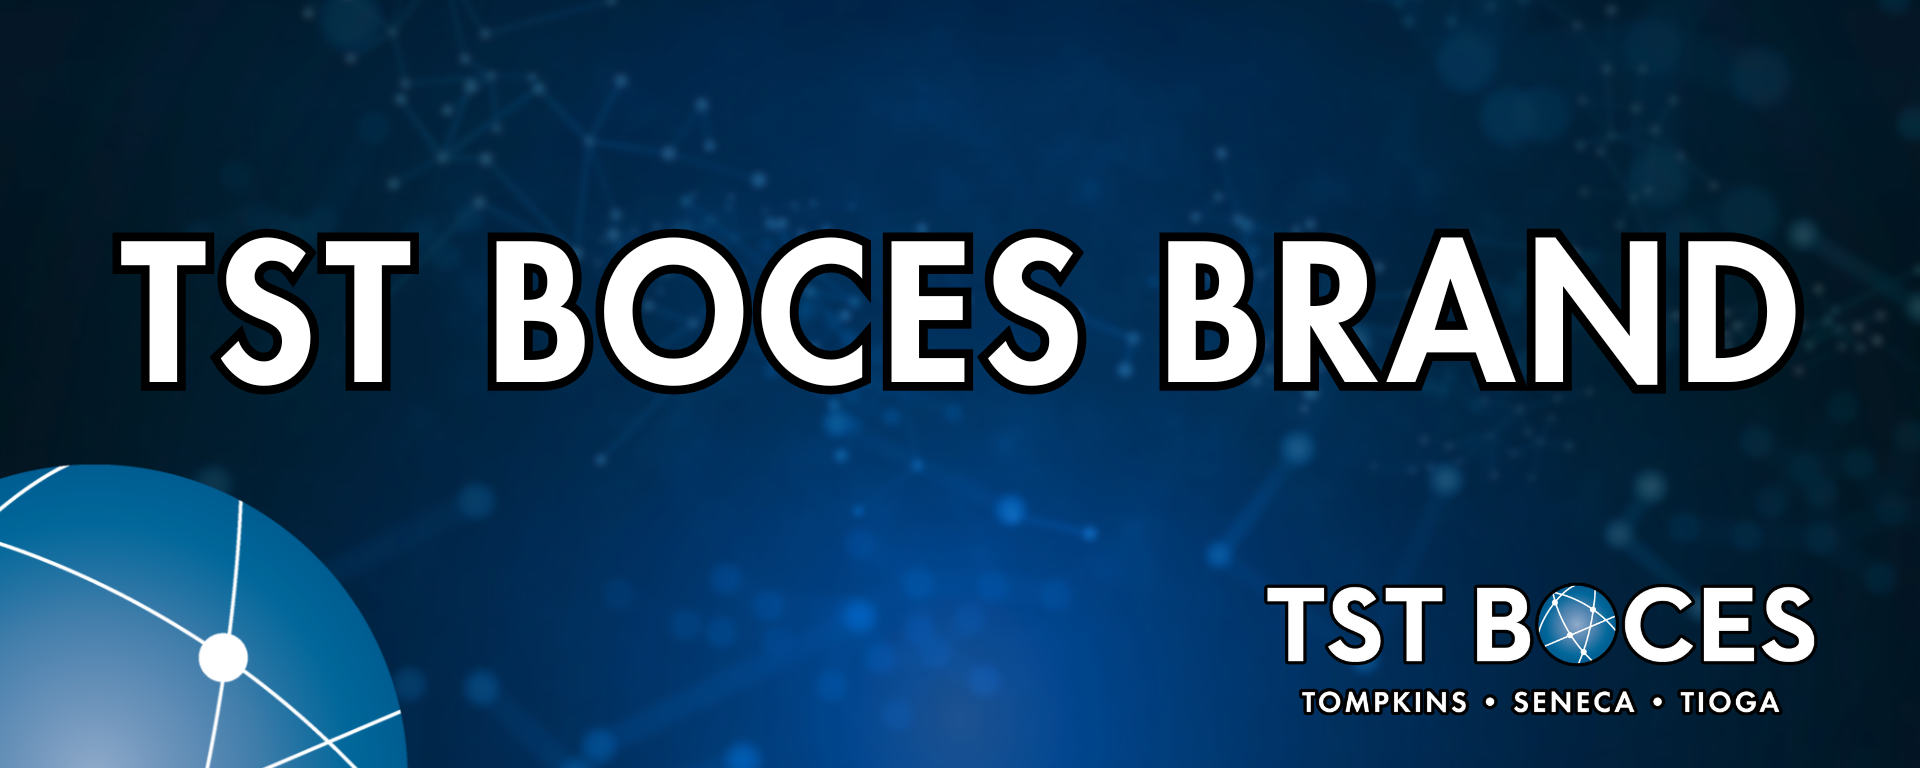 TST BOCES brand banner